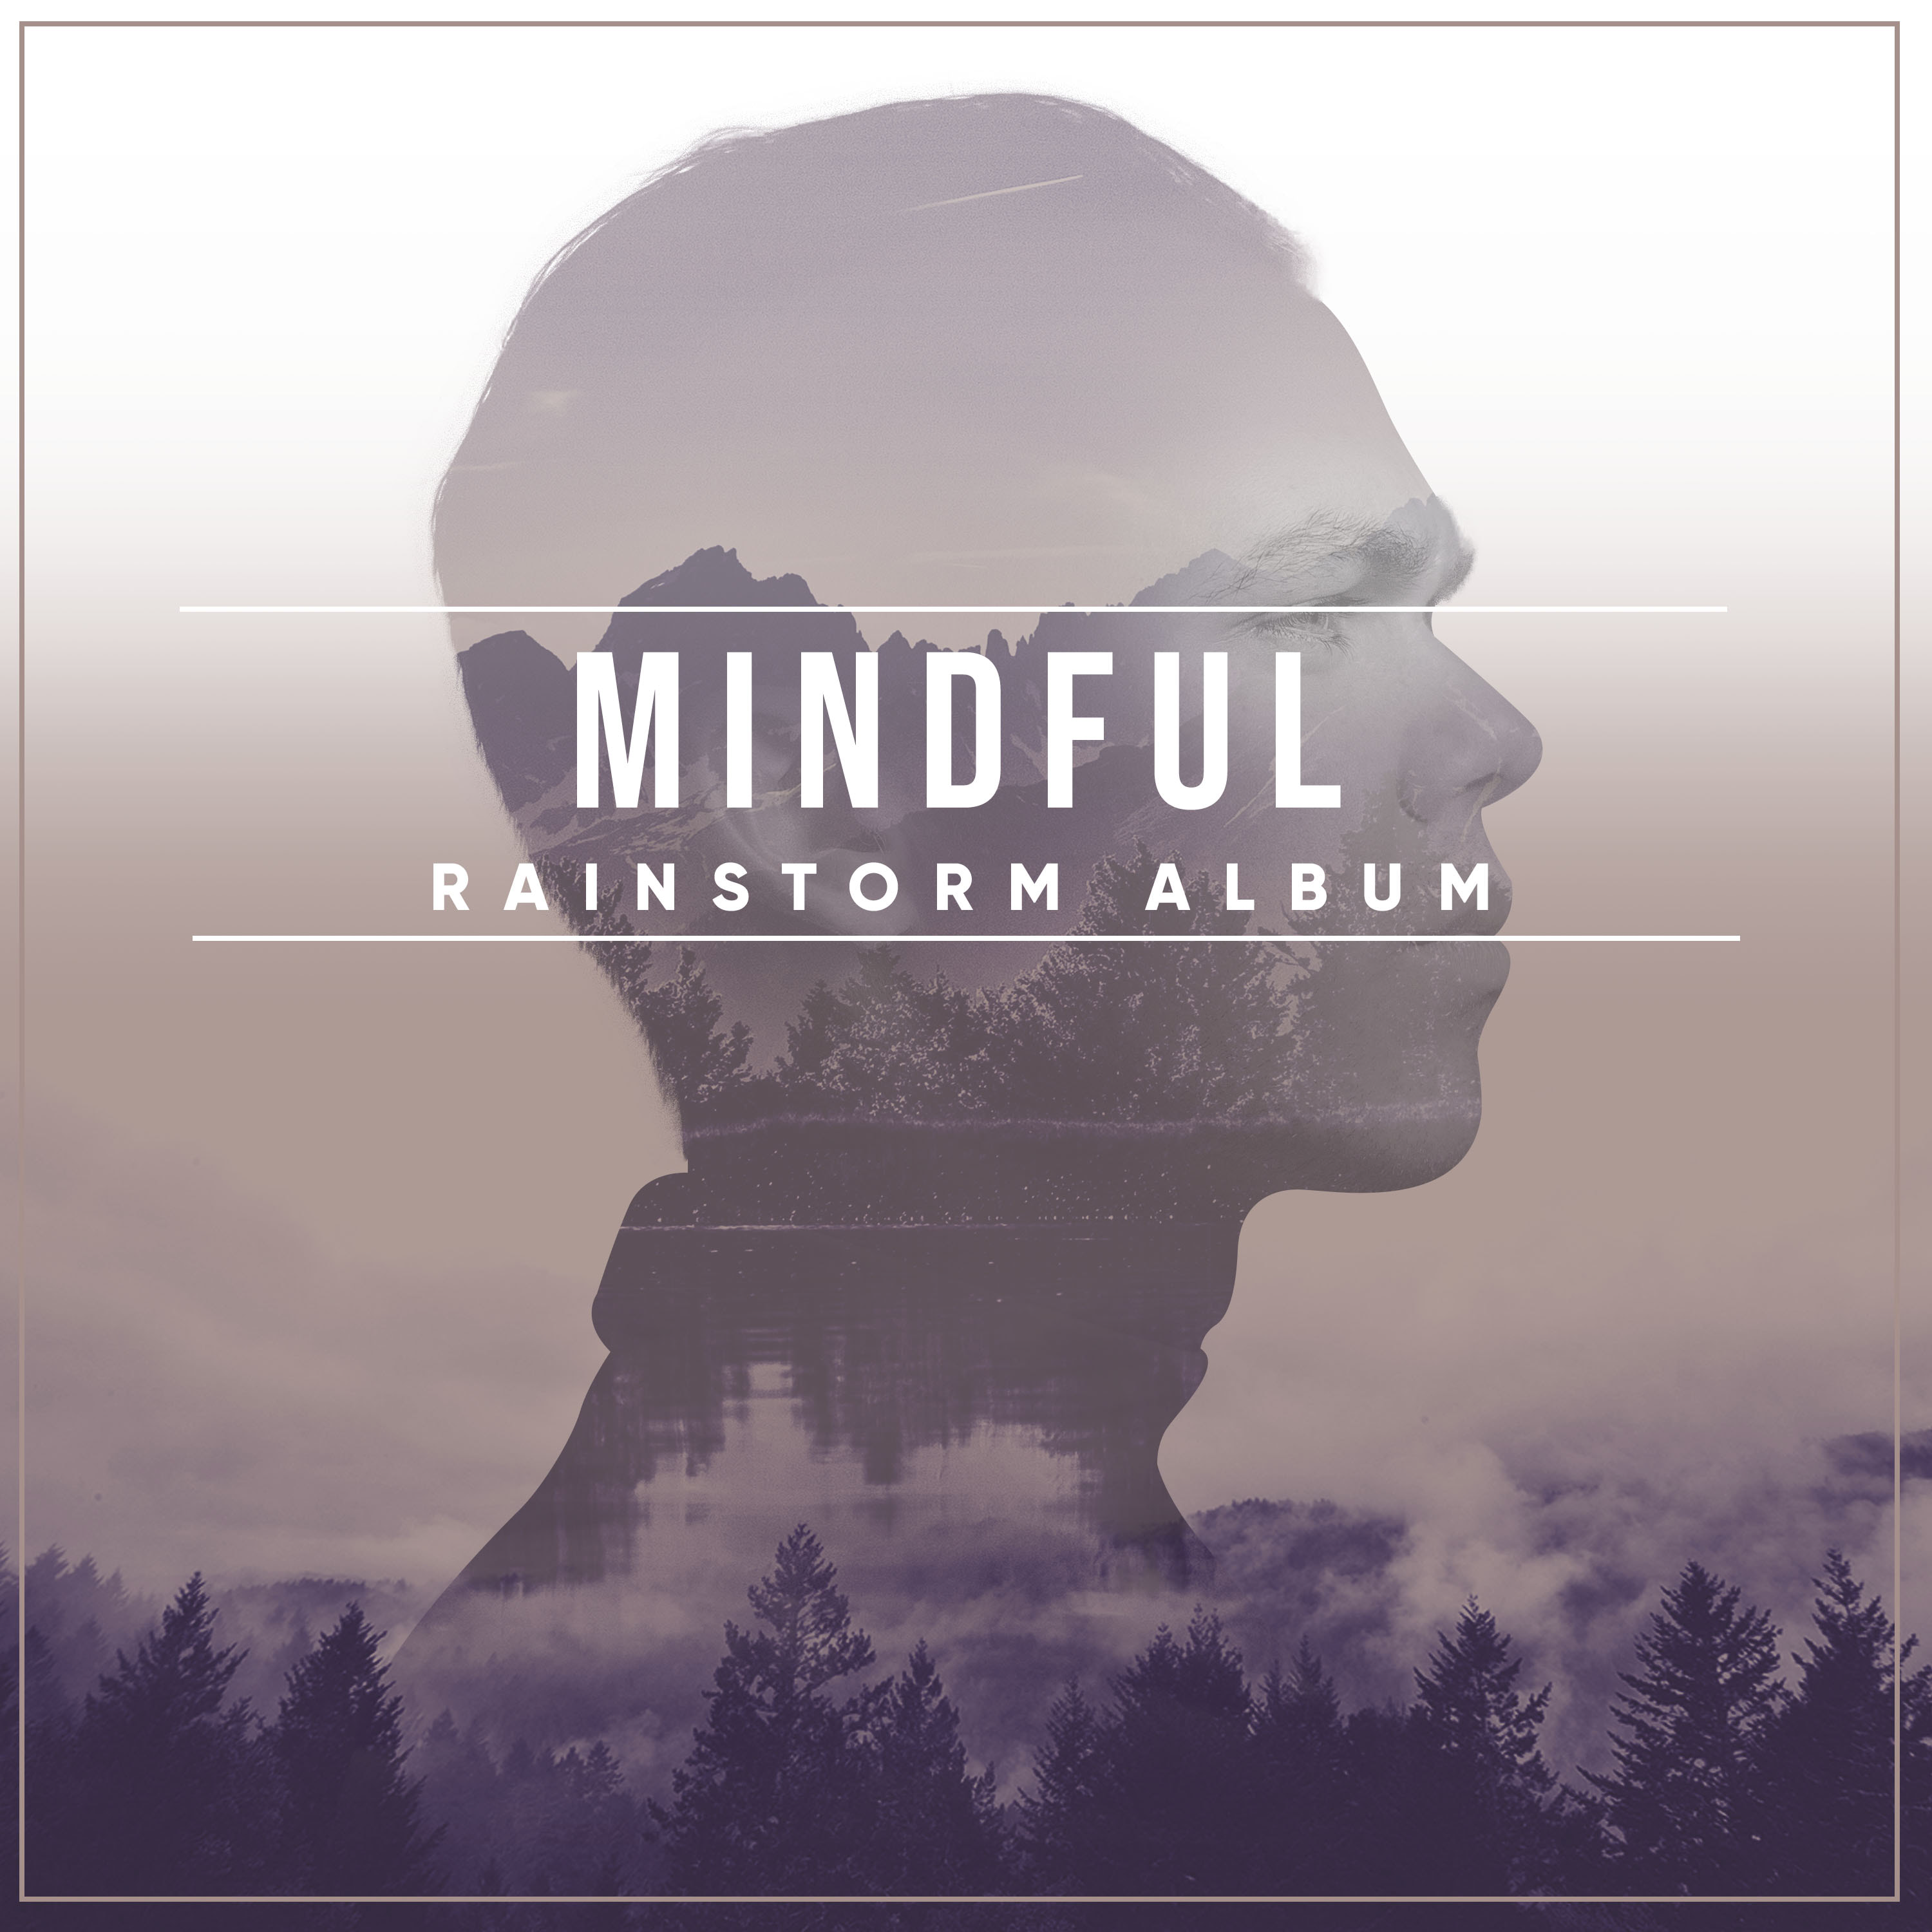 #12 Mindful Rainstorm Album from Nature